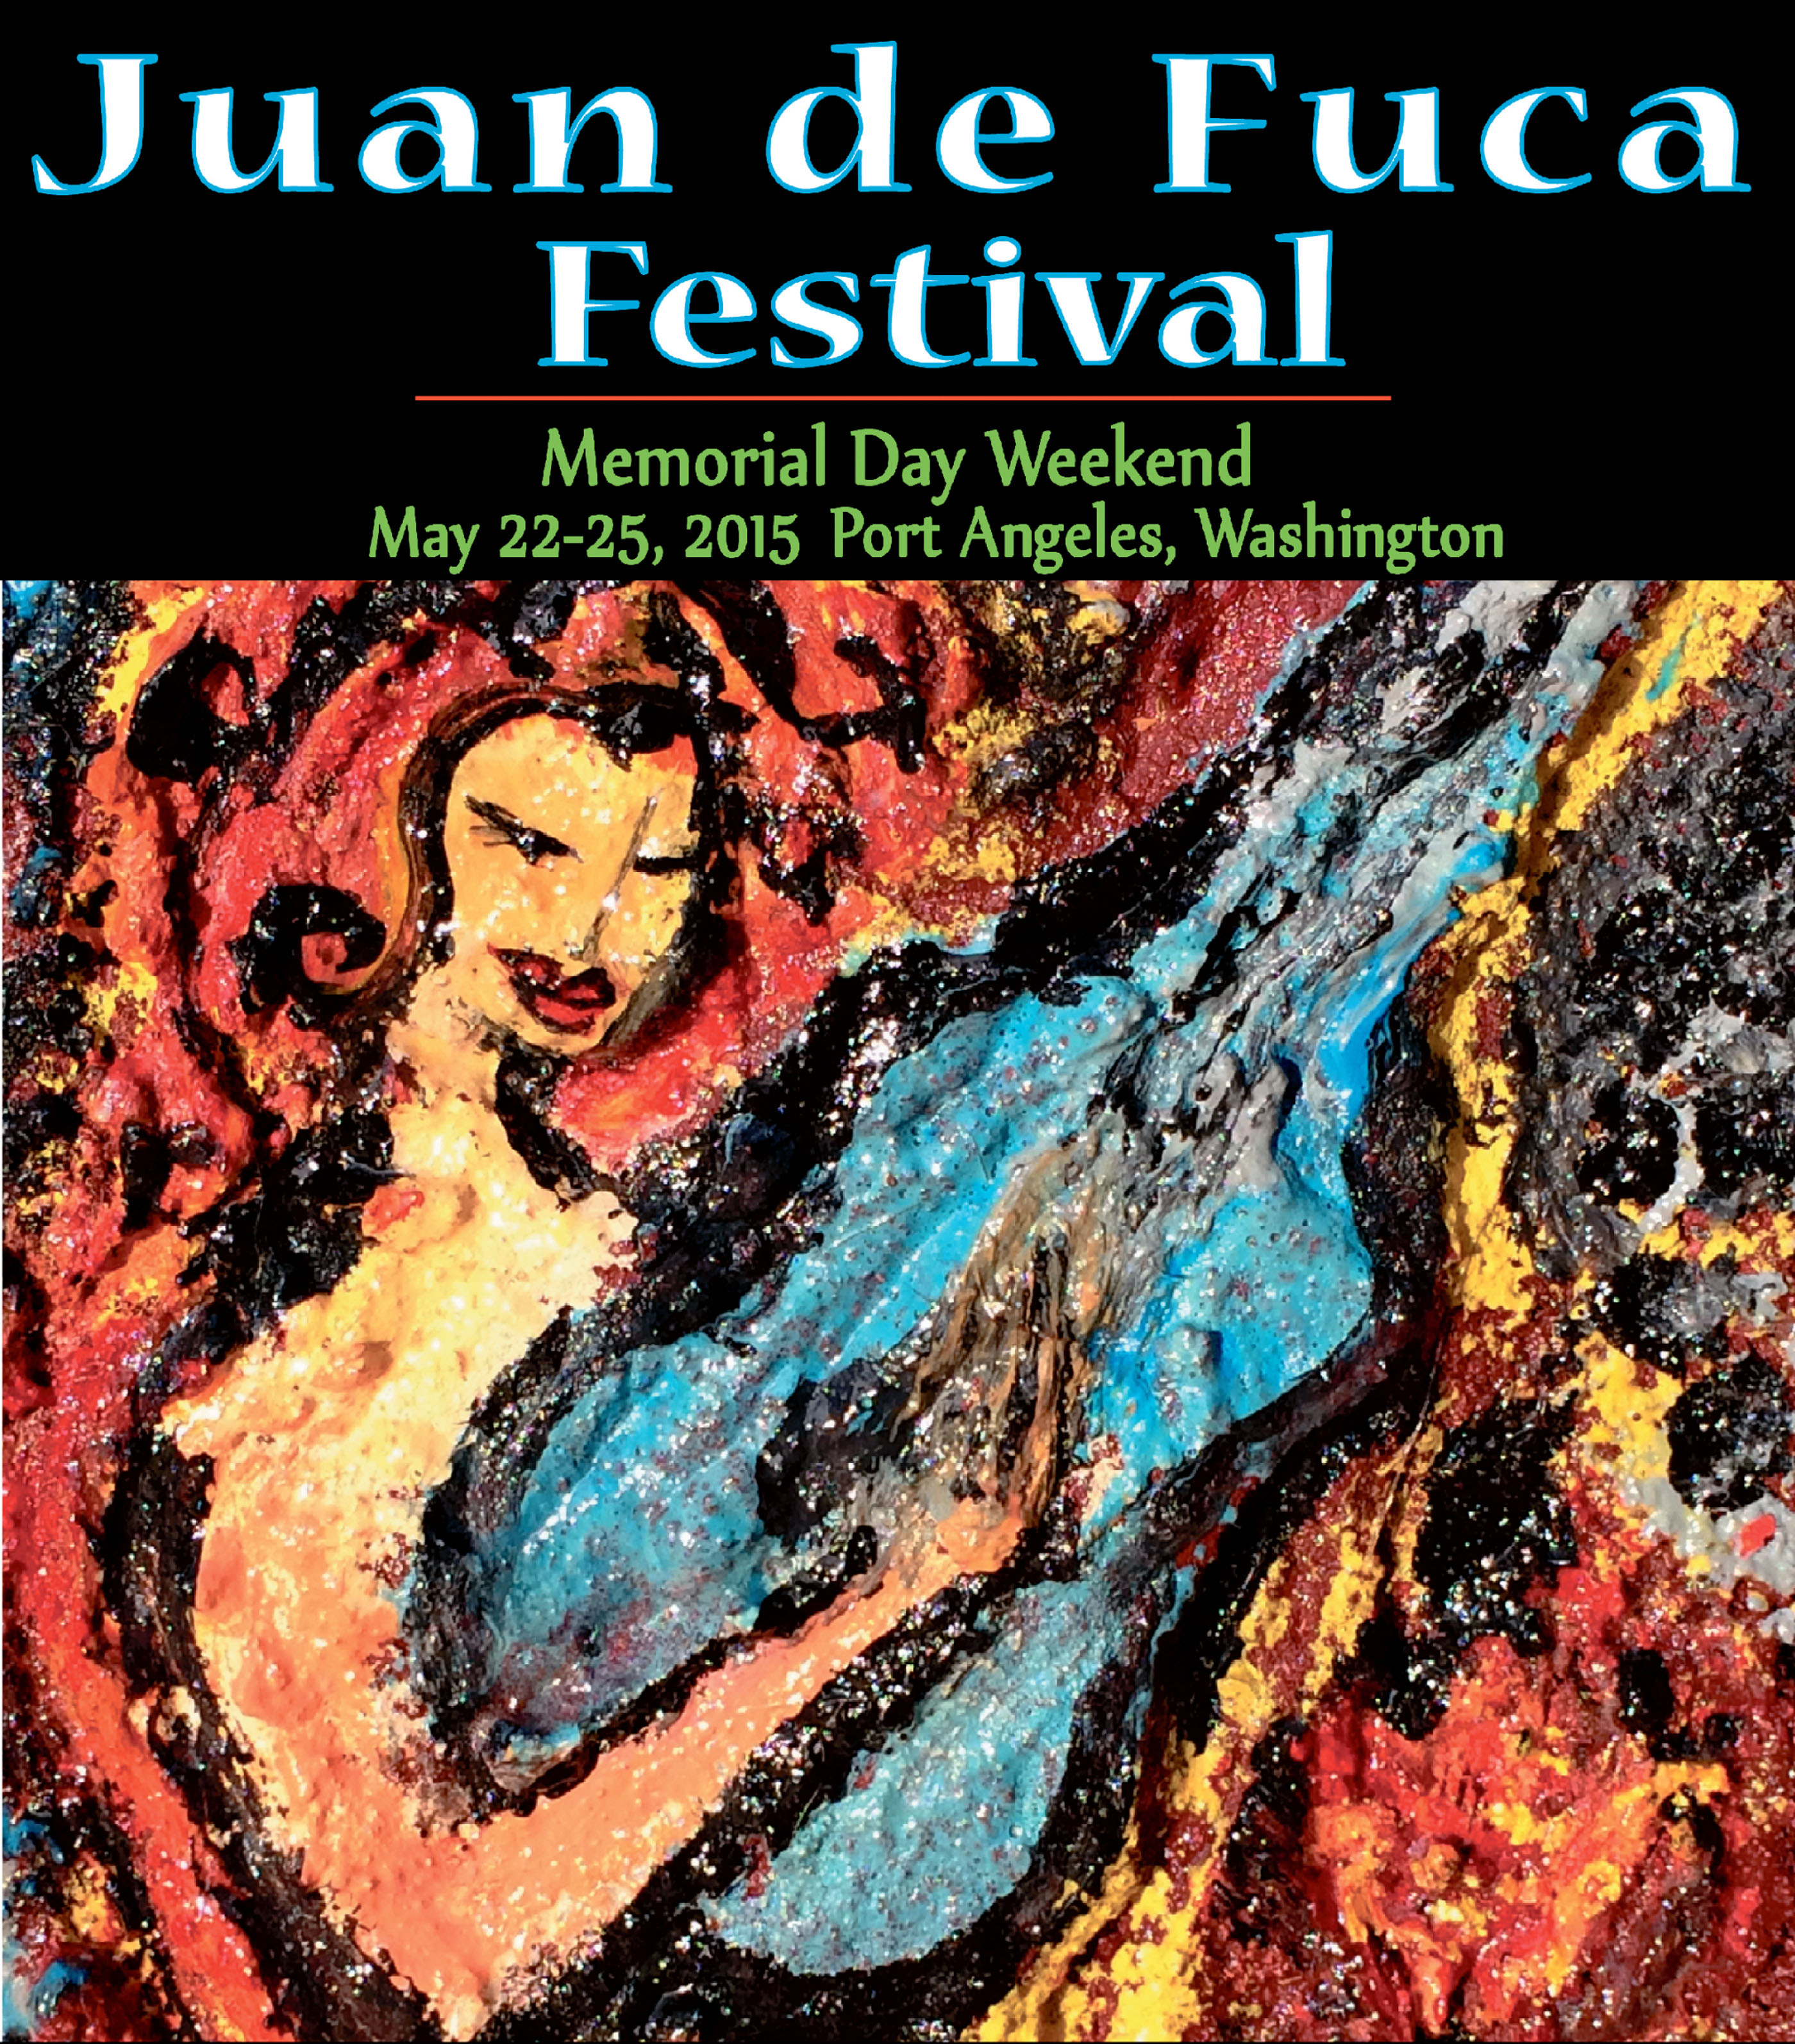 Juan de Fuca Festival of the Arts — 80 performances on six stages this